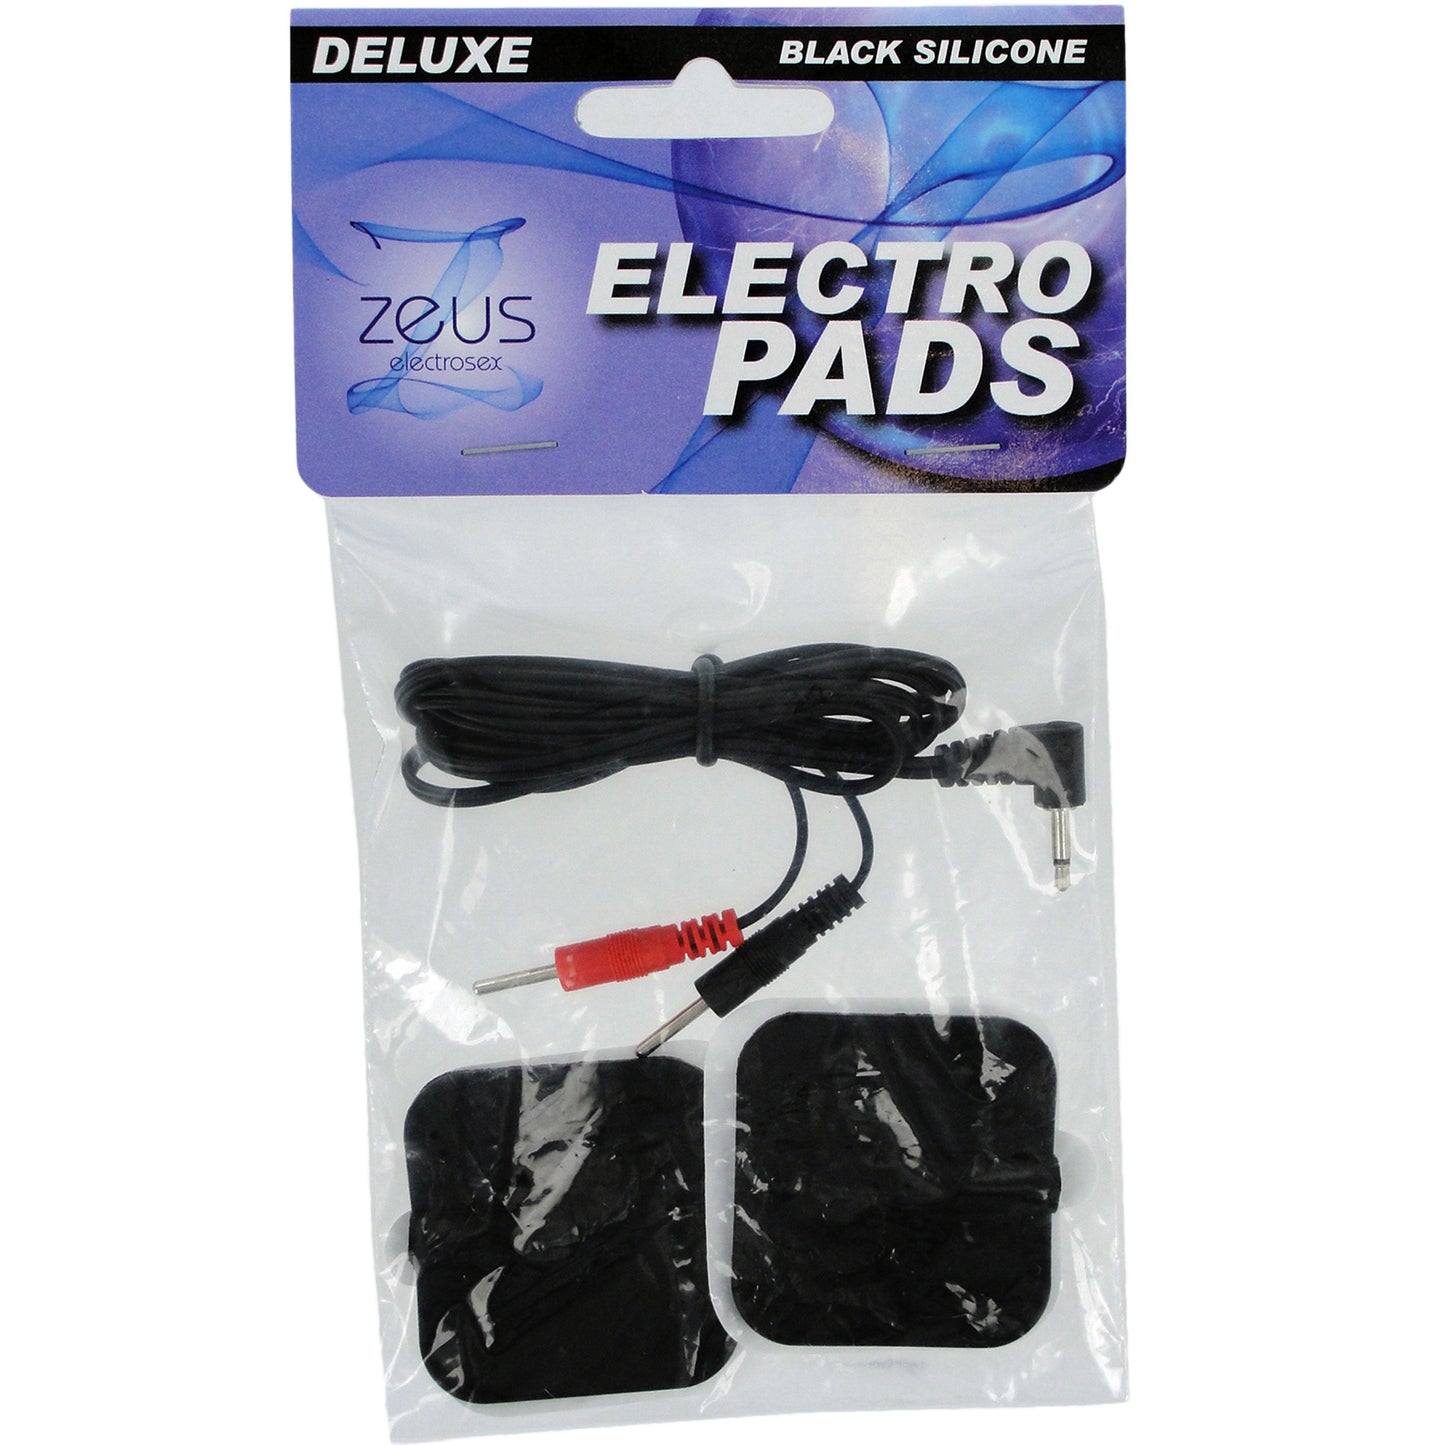 Zeus Deluxe Silicone Black Electro Pads